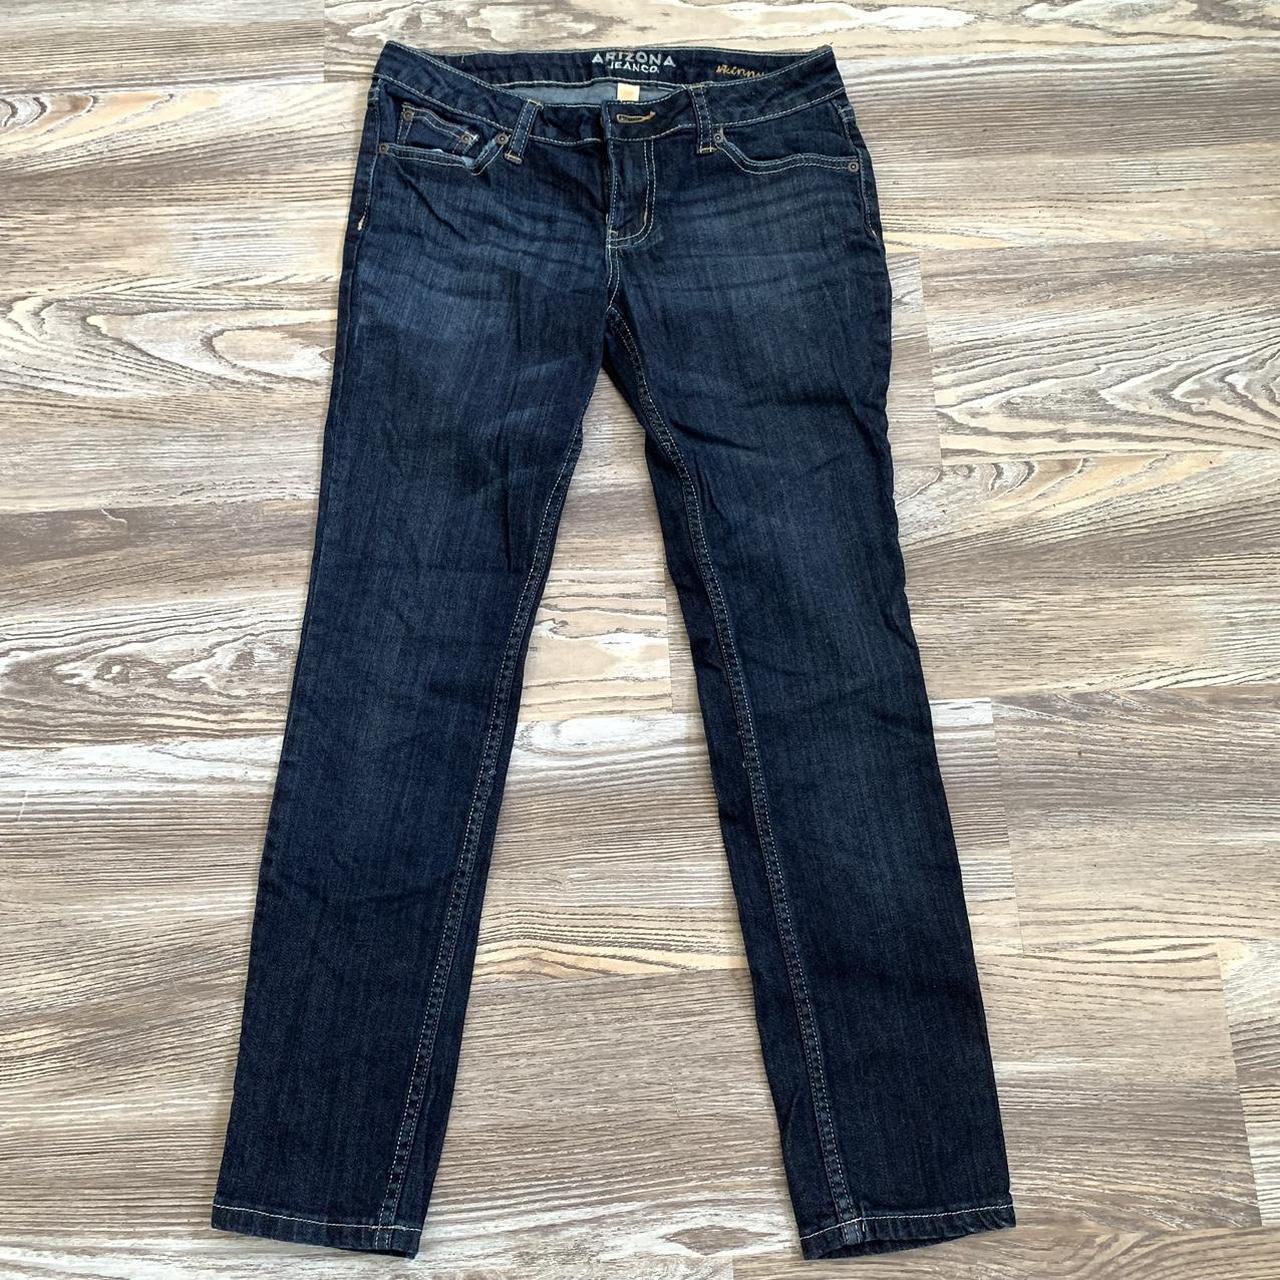 Preisreduziert Arizona skinny size denim, 7 jeans! Dark blue - Depop short